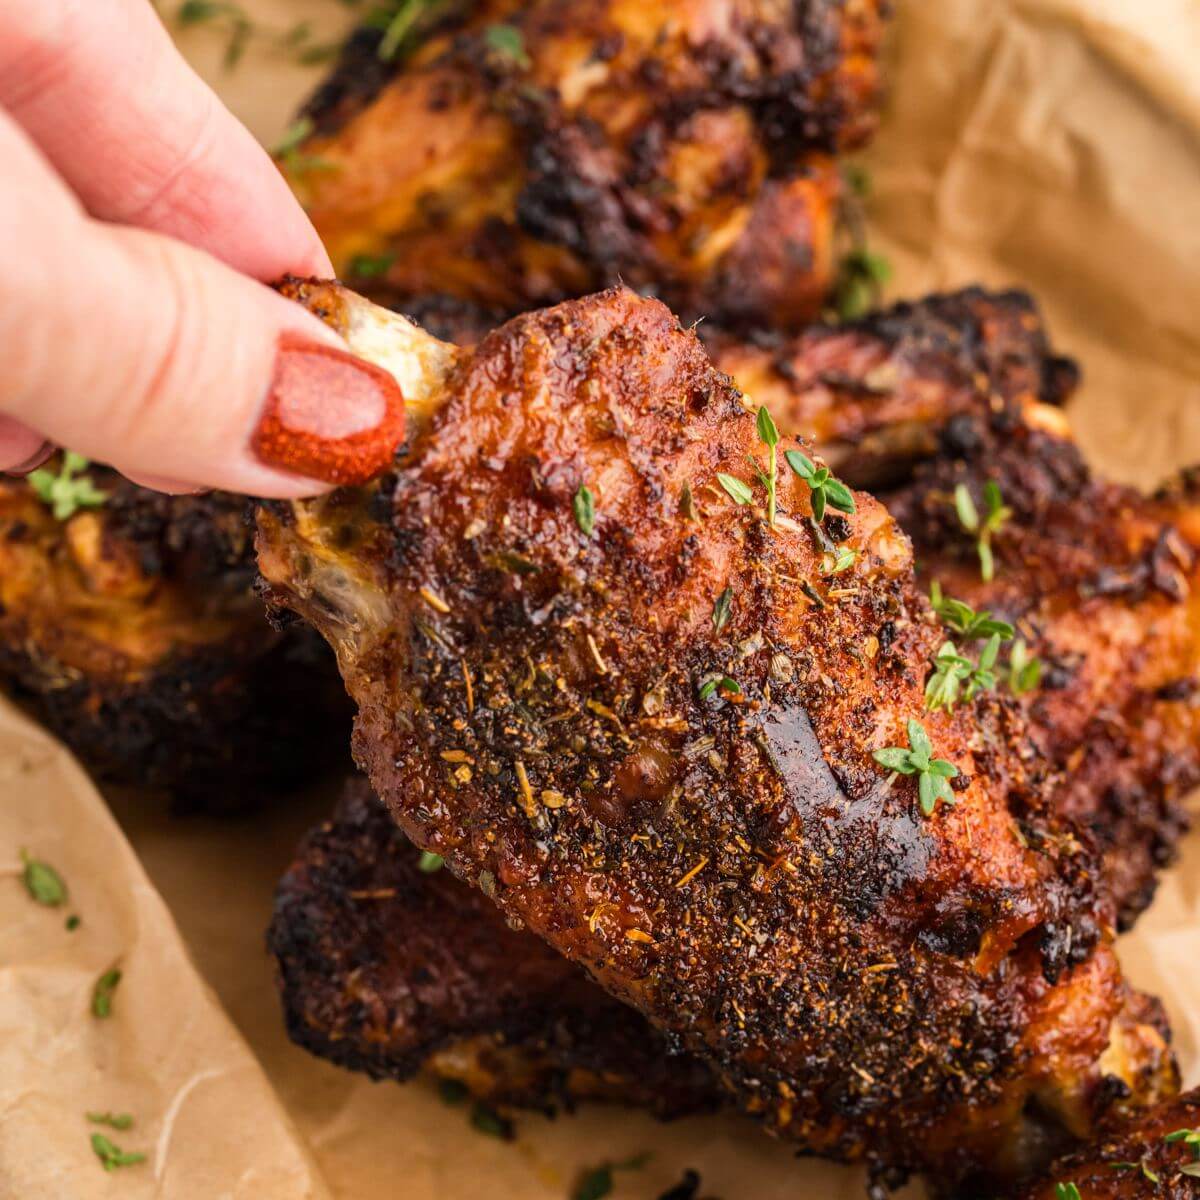 Easy Crispy Air Fryer Turkey Wings Recipe • The Fresh Cooky